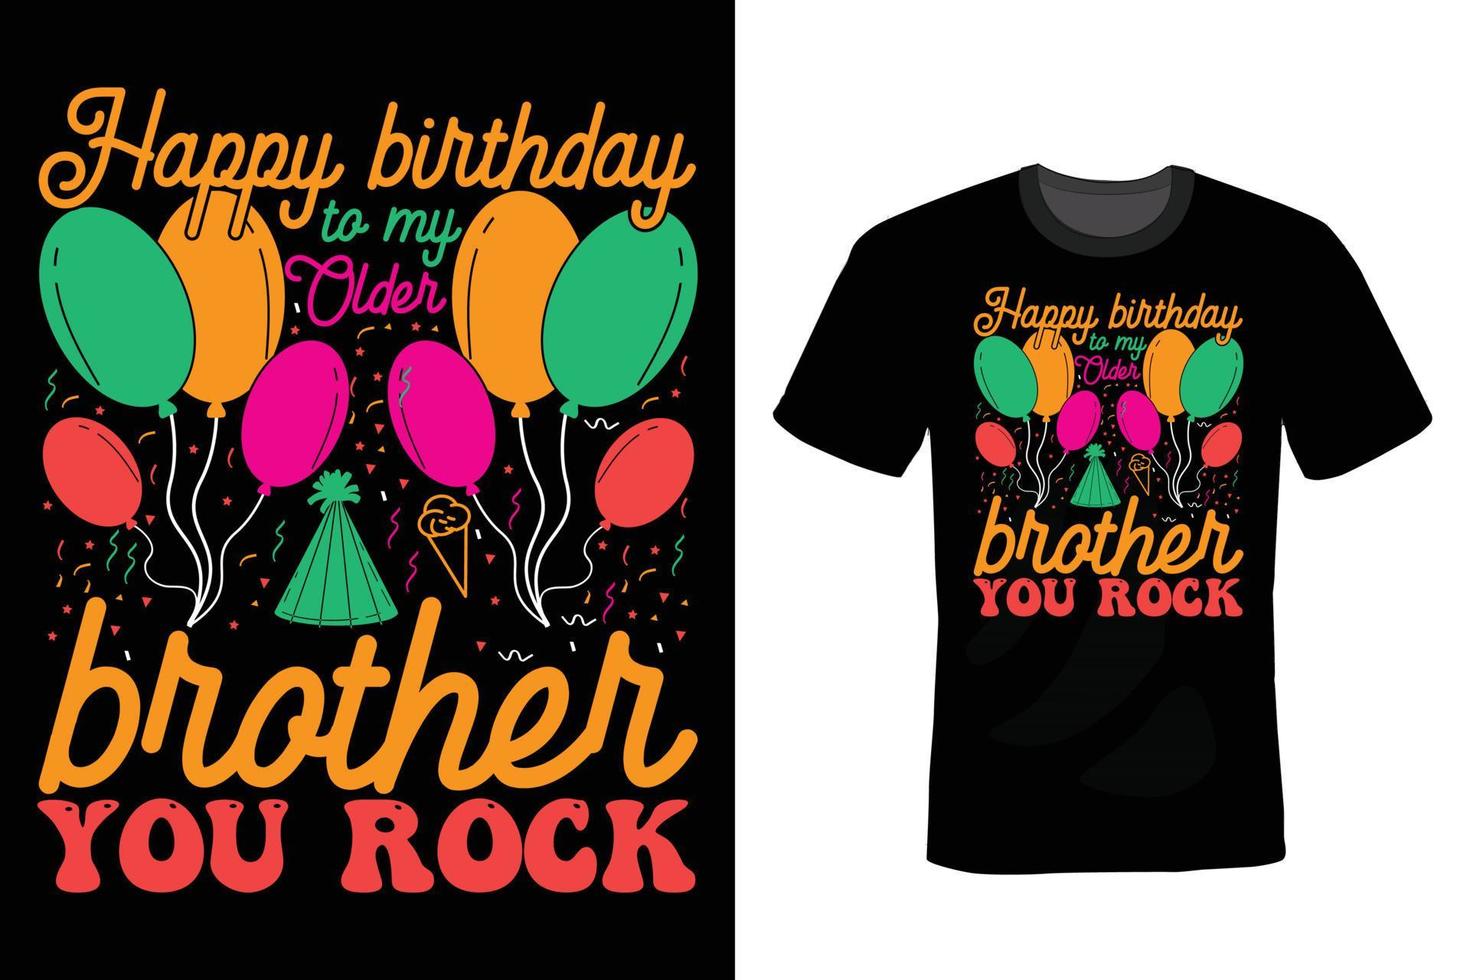 födelsedag citat t-shirt design, vintage, typografi vektor